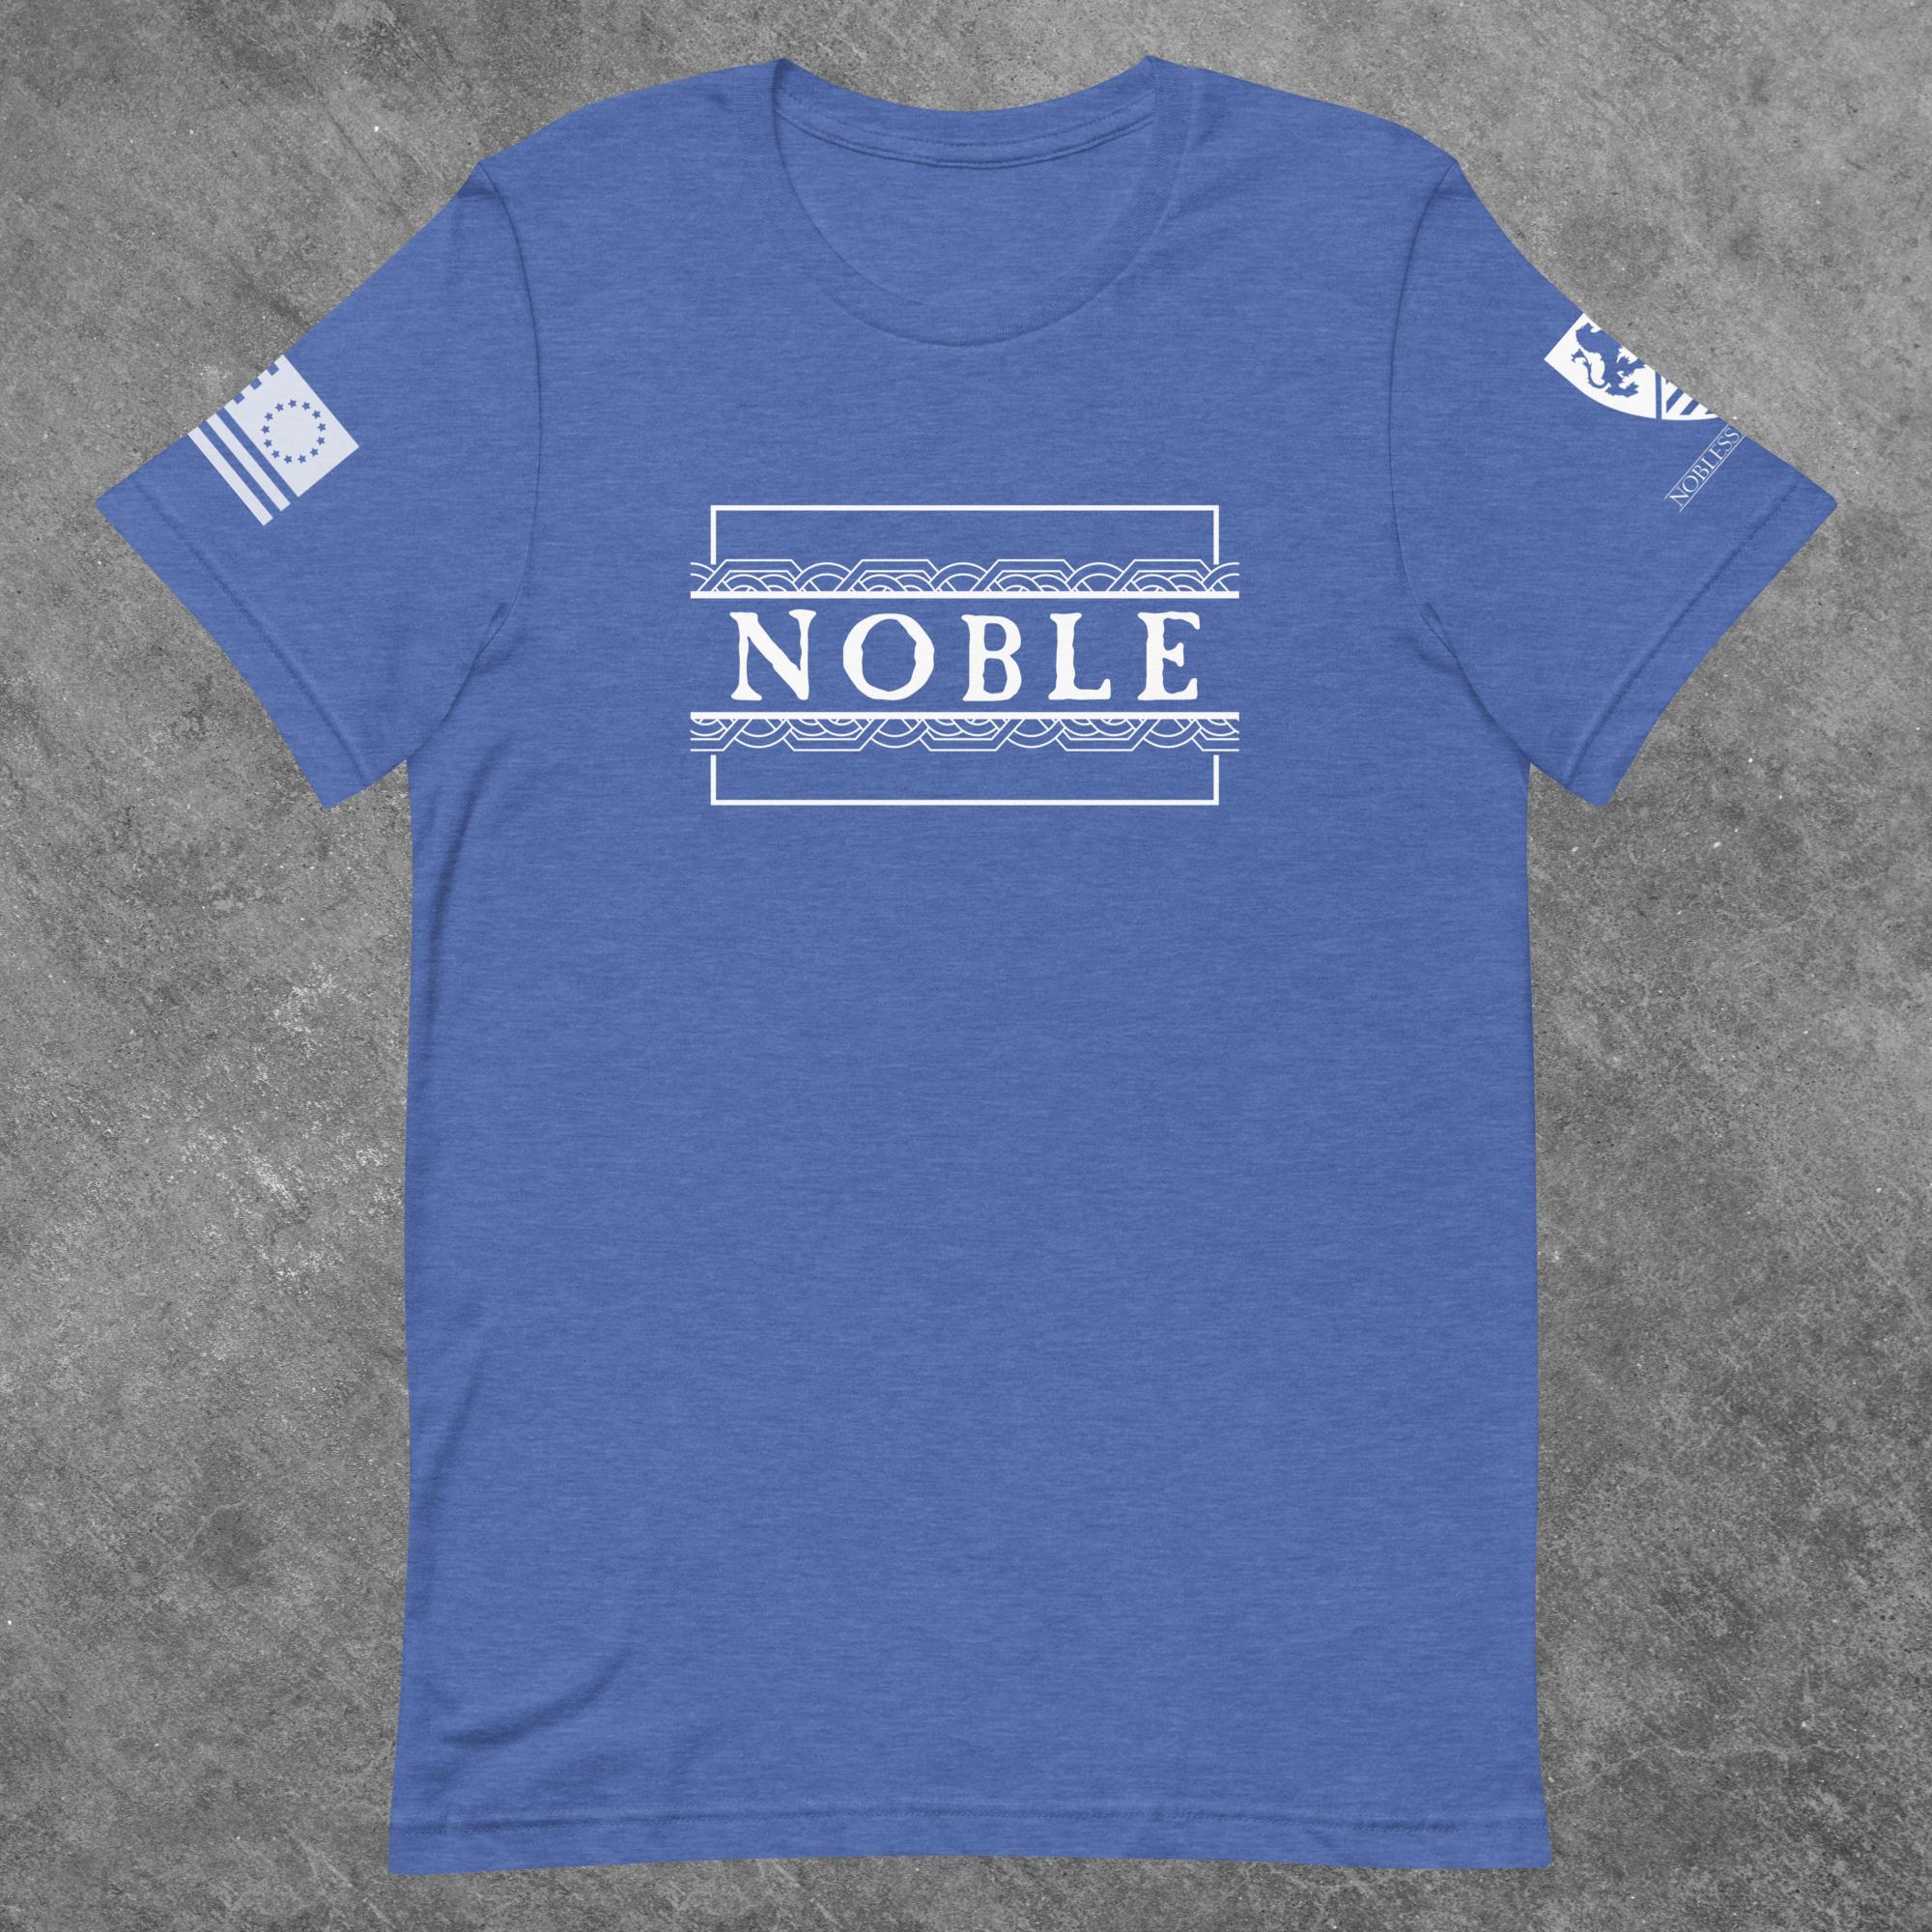 Noble, Celtic Knots - Heather - T-Shirt - Noblesse Oblige Apparel